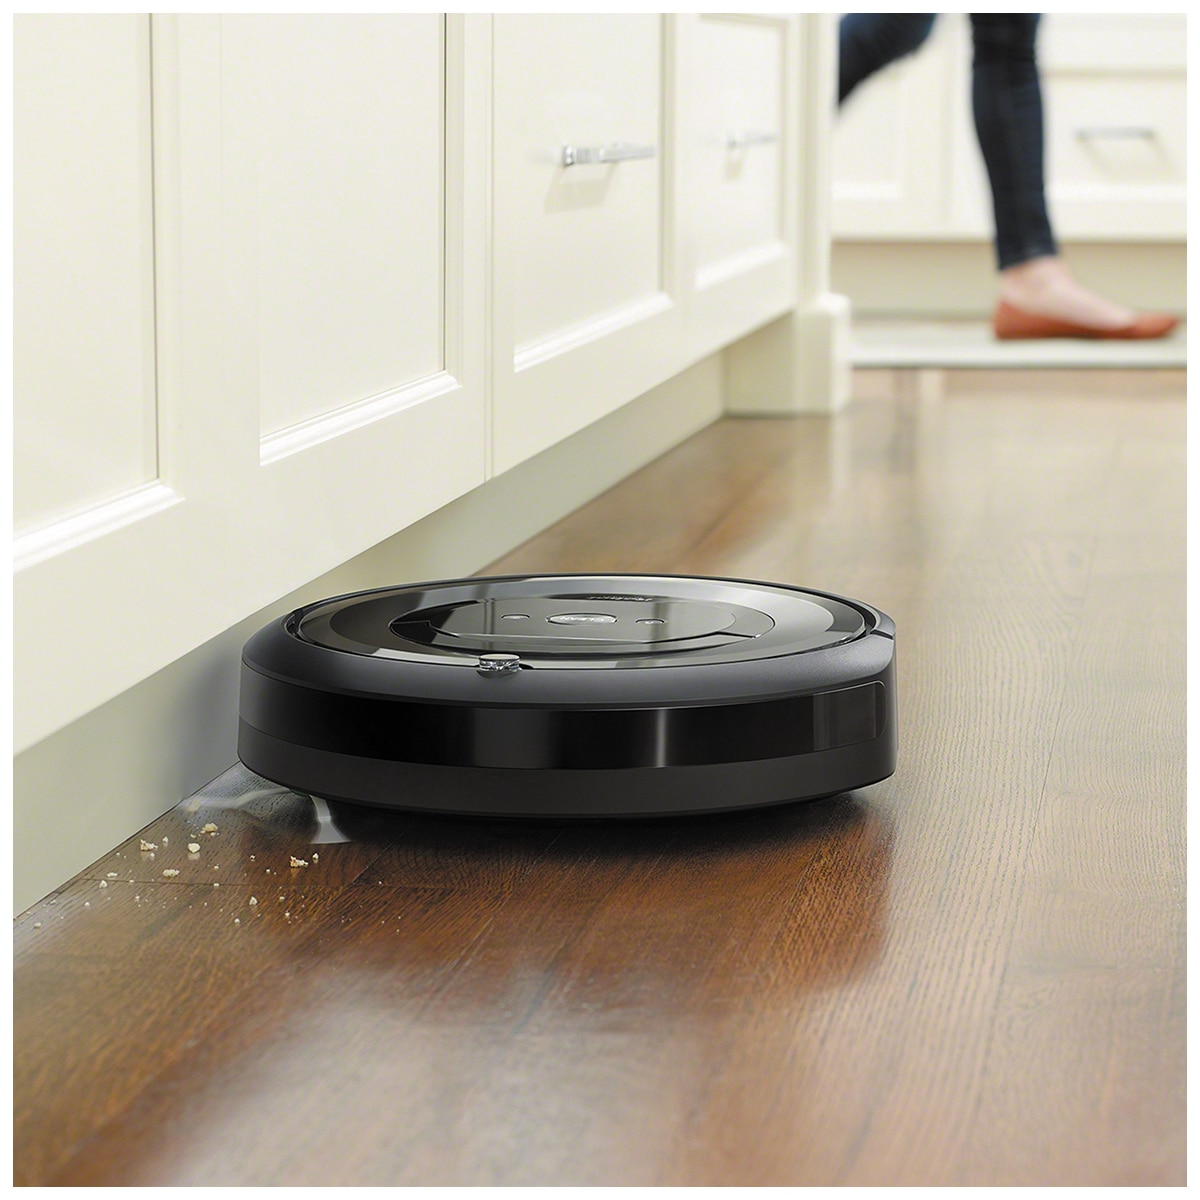 Irobot Roomba E5 Robotic Floor Vacuum Costco Australia